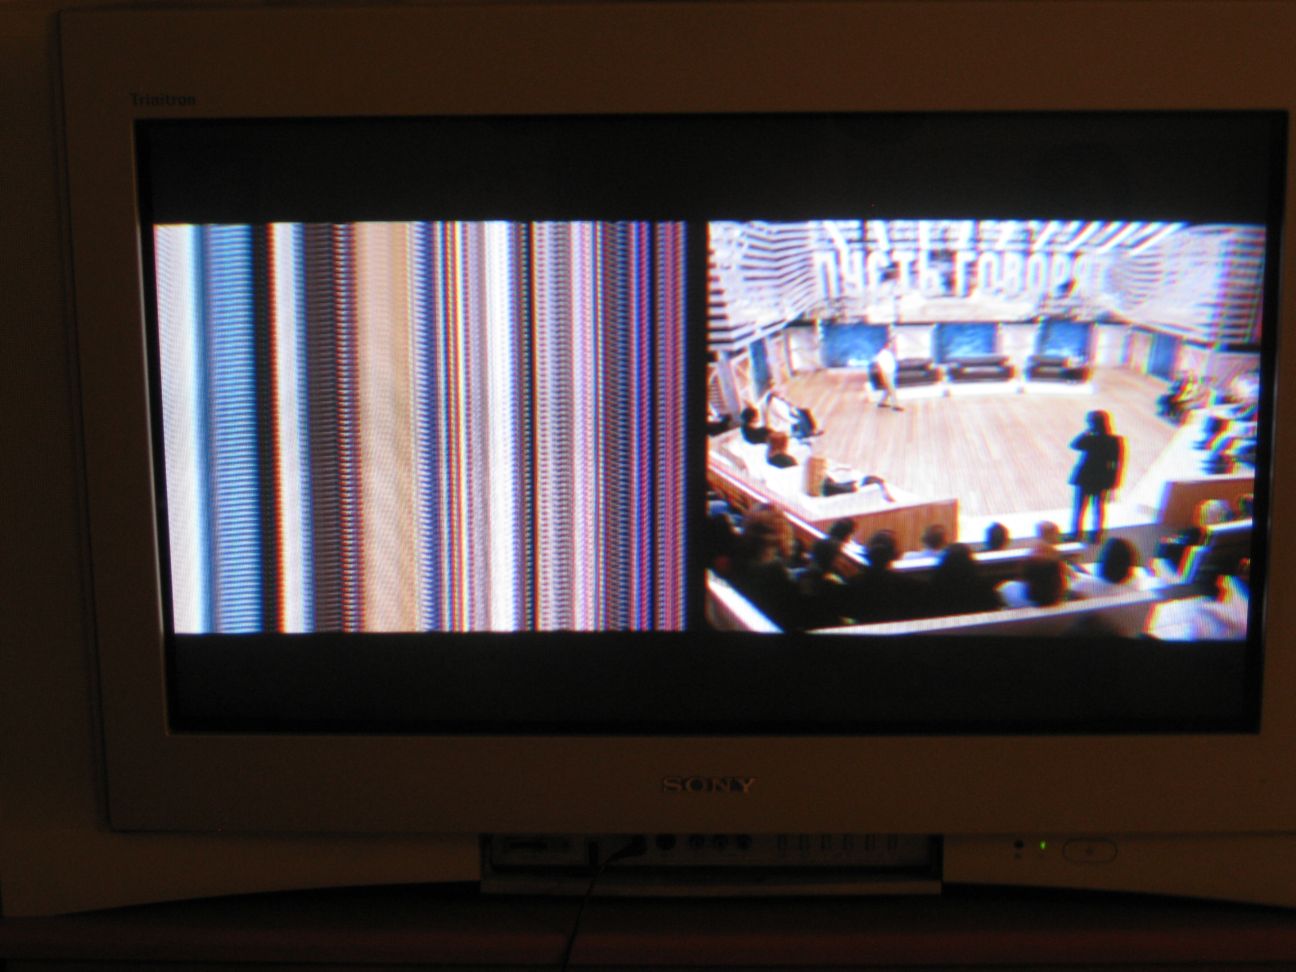 Телевизор завис и не реагирует. Поломка телевизора. Дефект экрана кинескопного телевизора. Экран поломки телевизора. Телевизор черный экран.